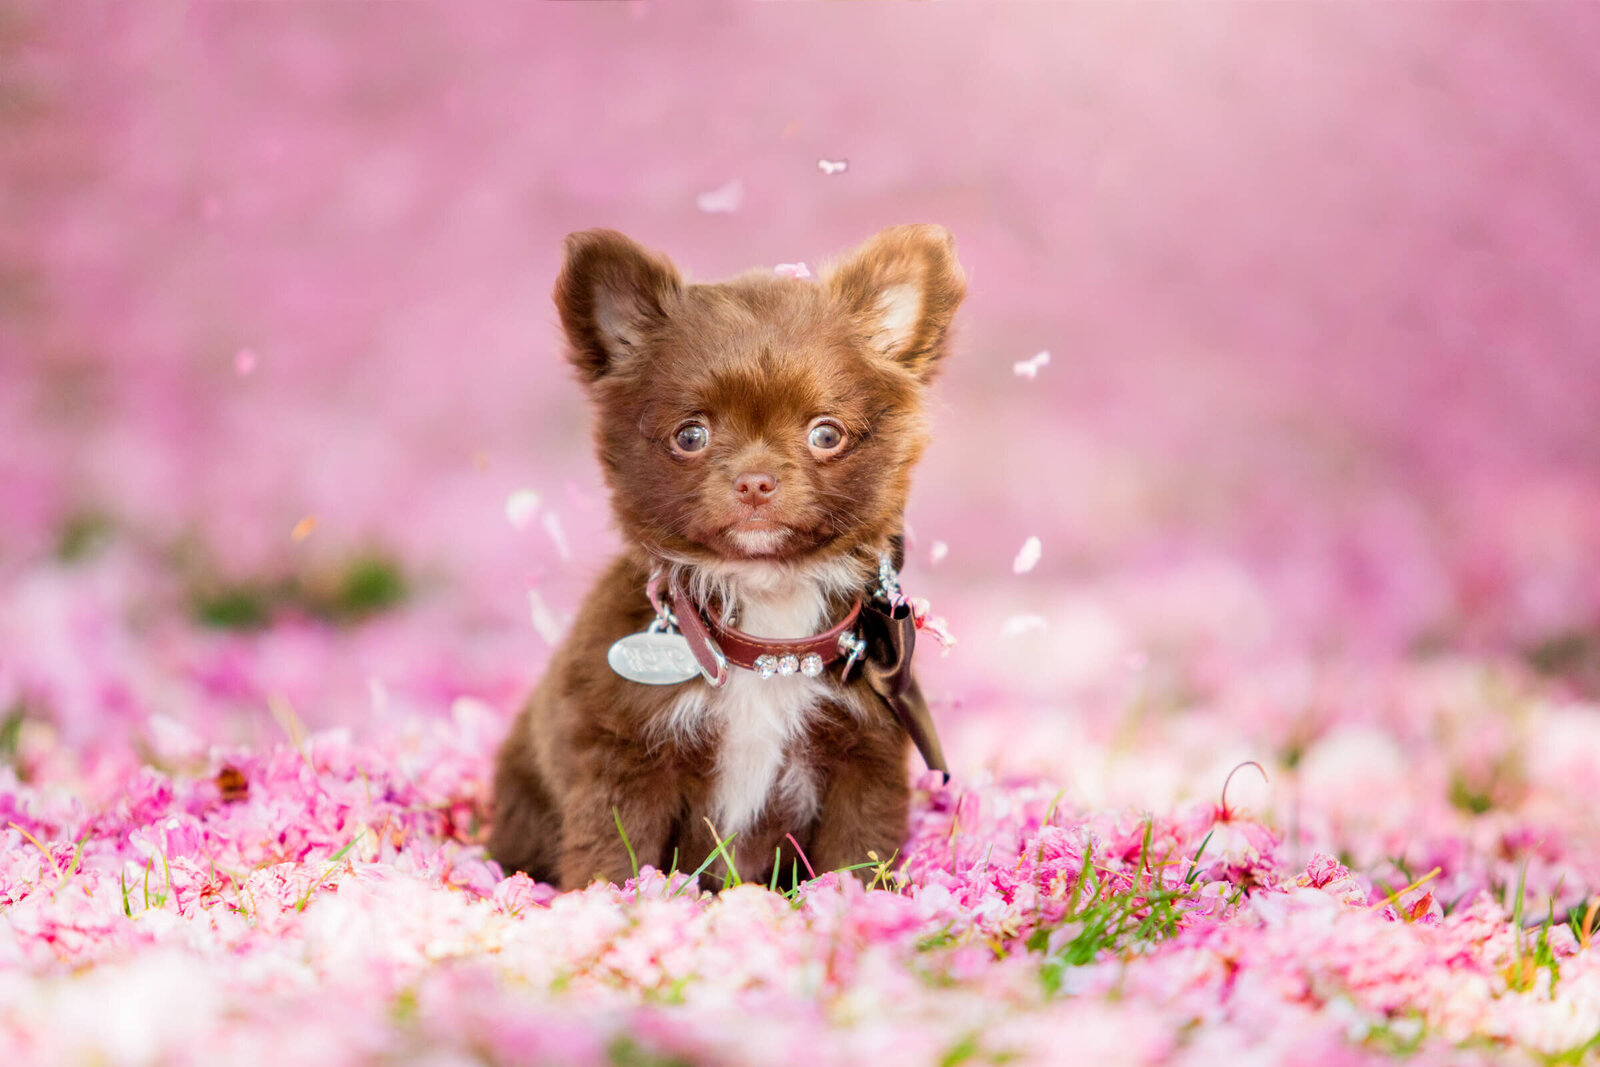 055-20190423-Pretty-Paws-honden-fotografie-tilburg-langharige-chihuahua-bloesem-HR